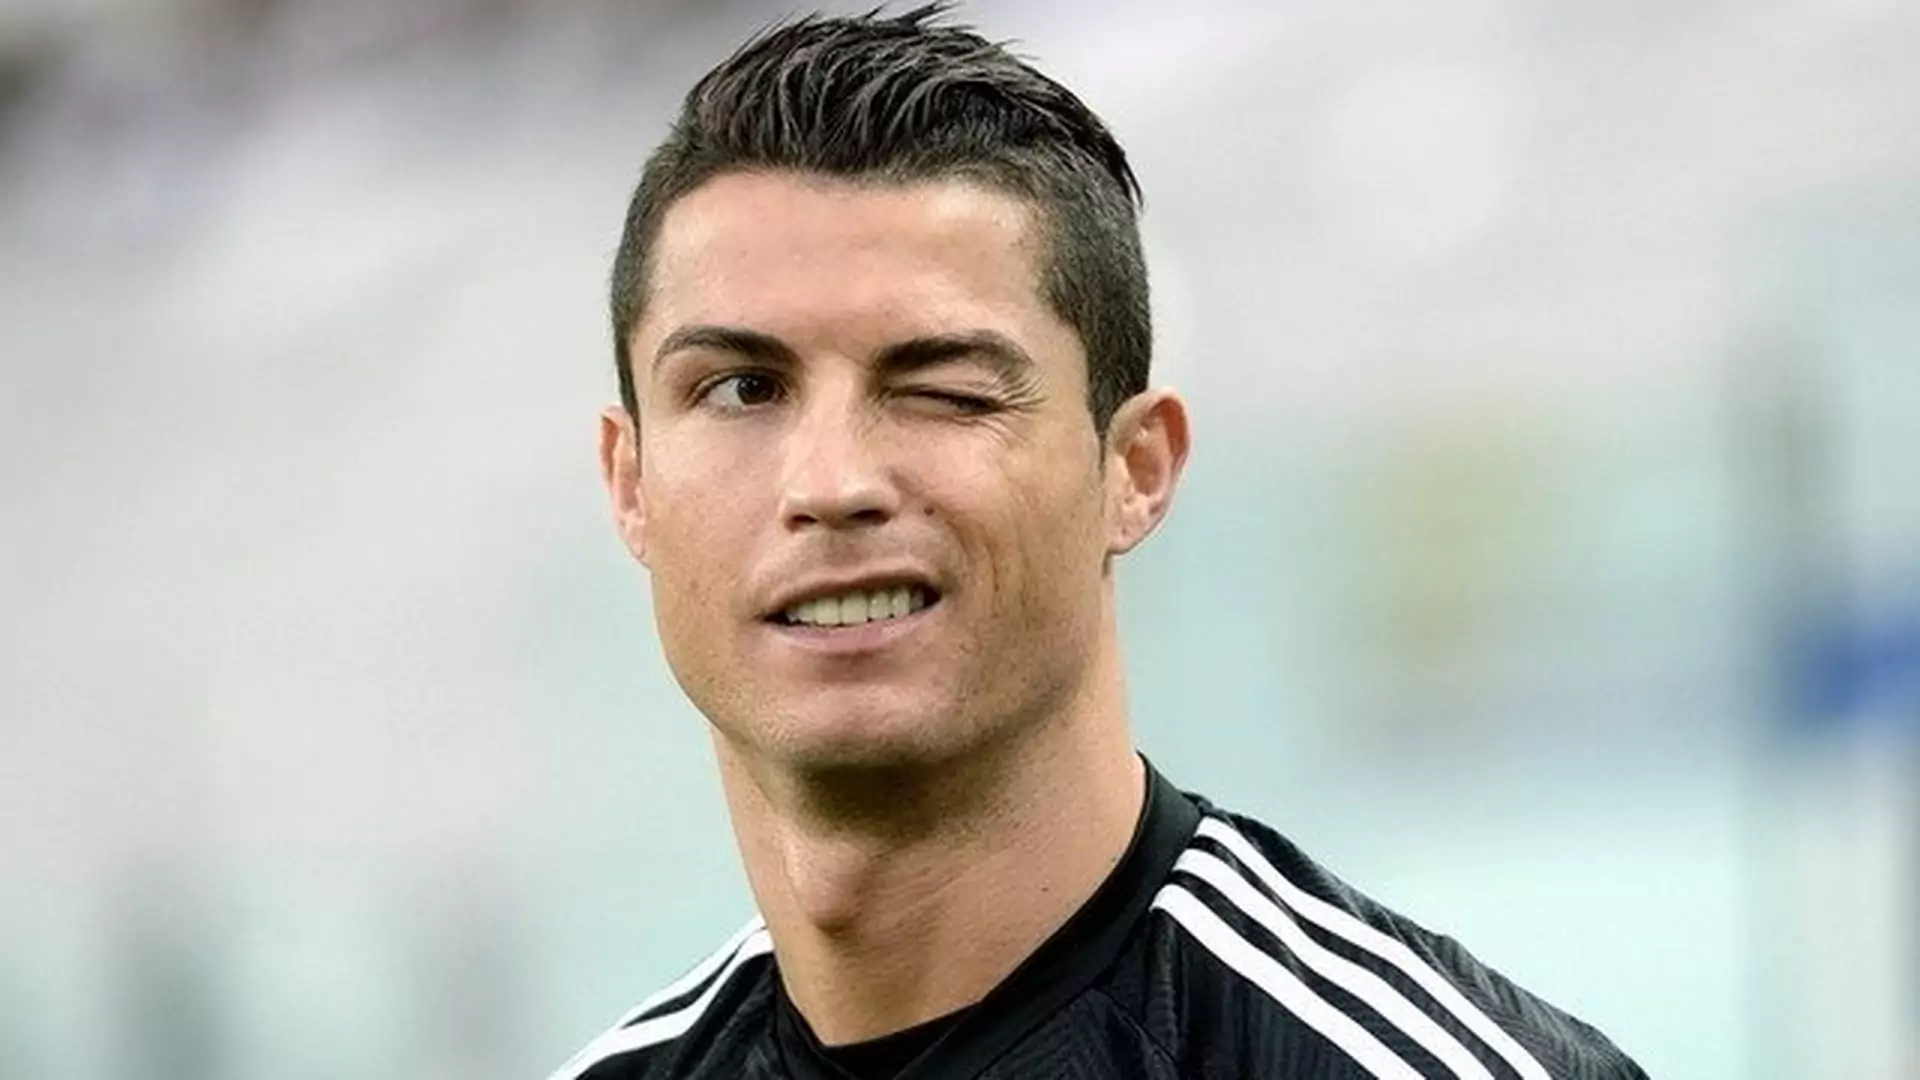 Christiano Ronaldo znowu triumfuje